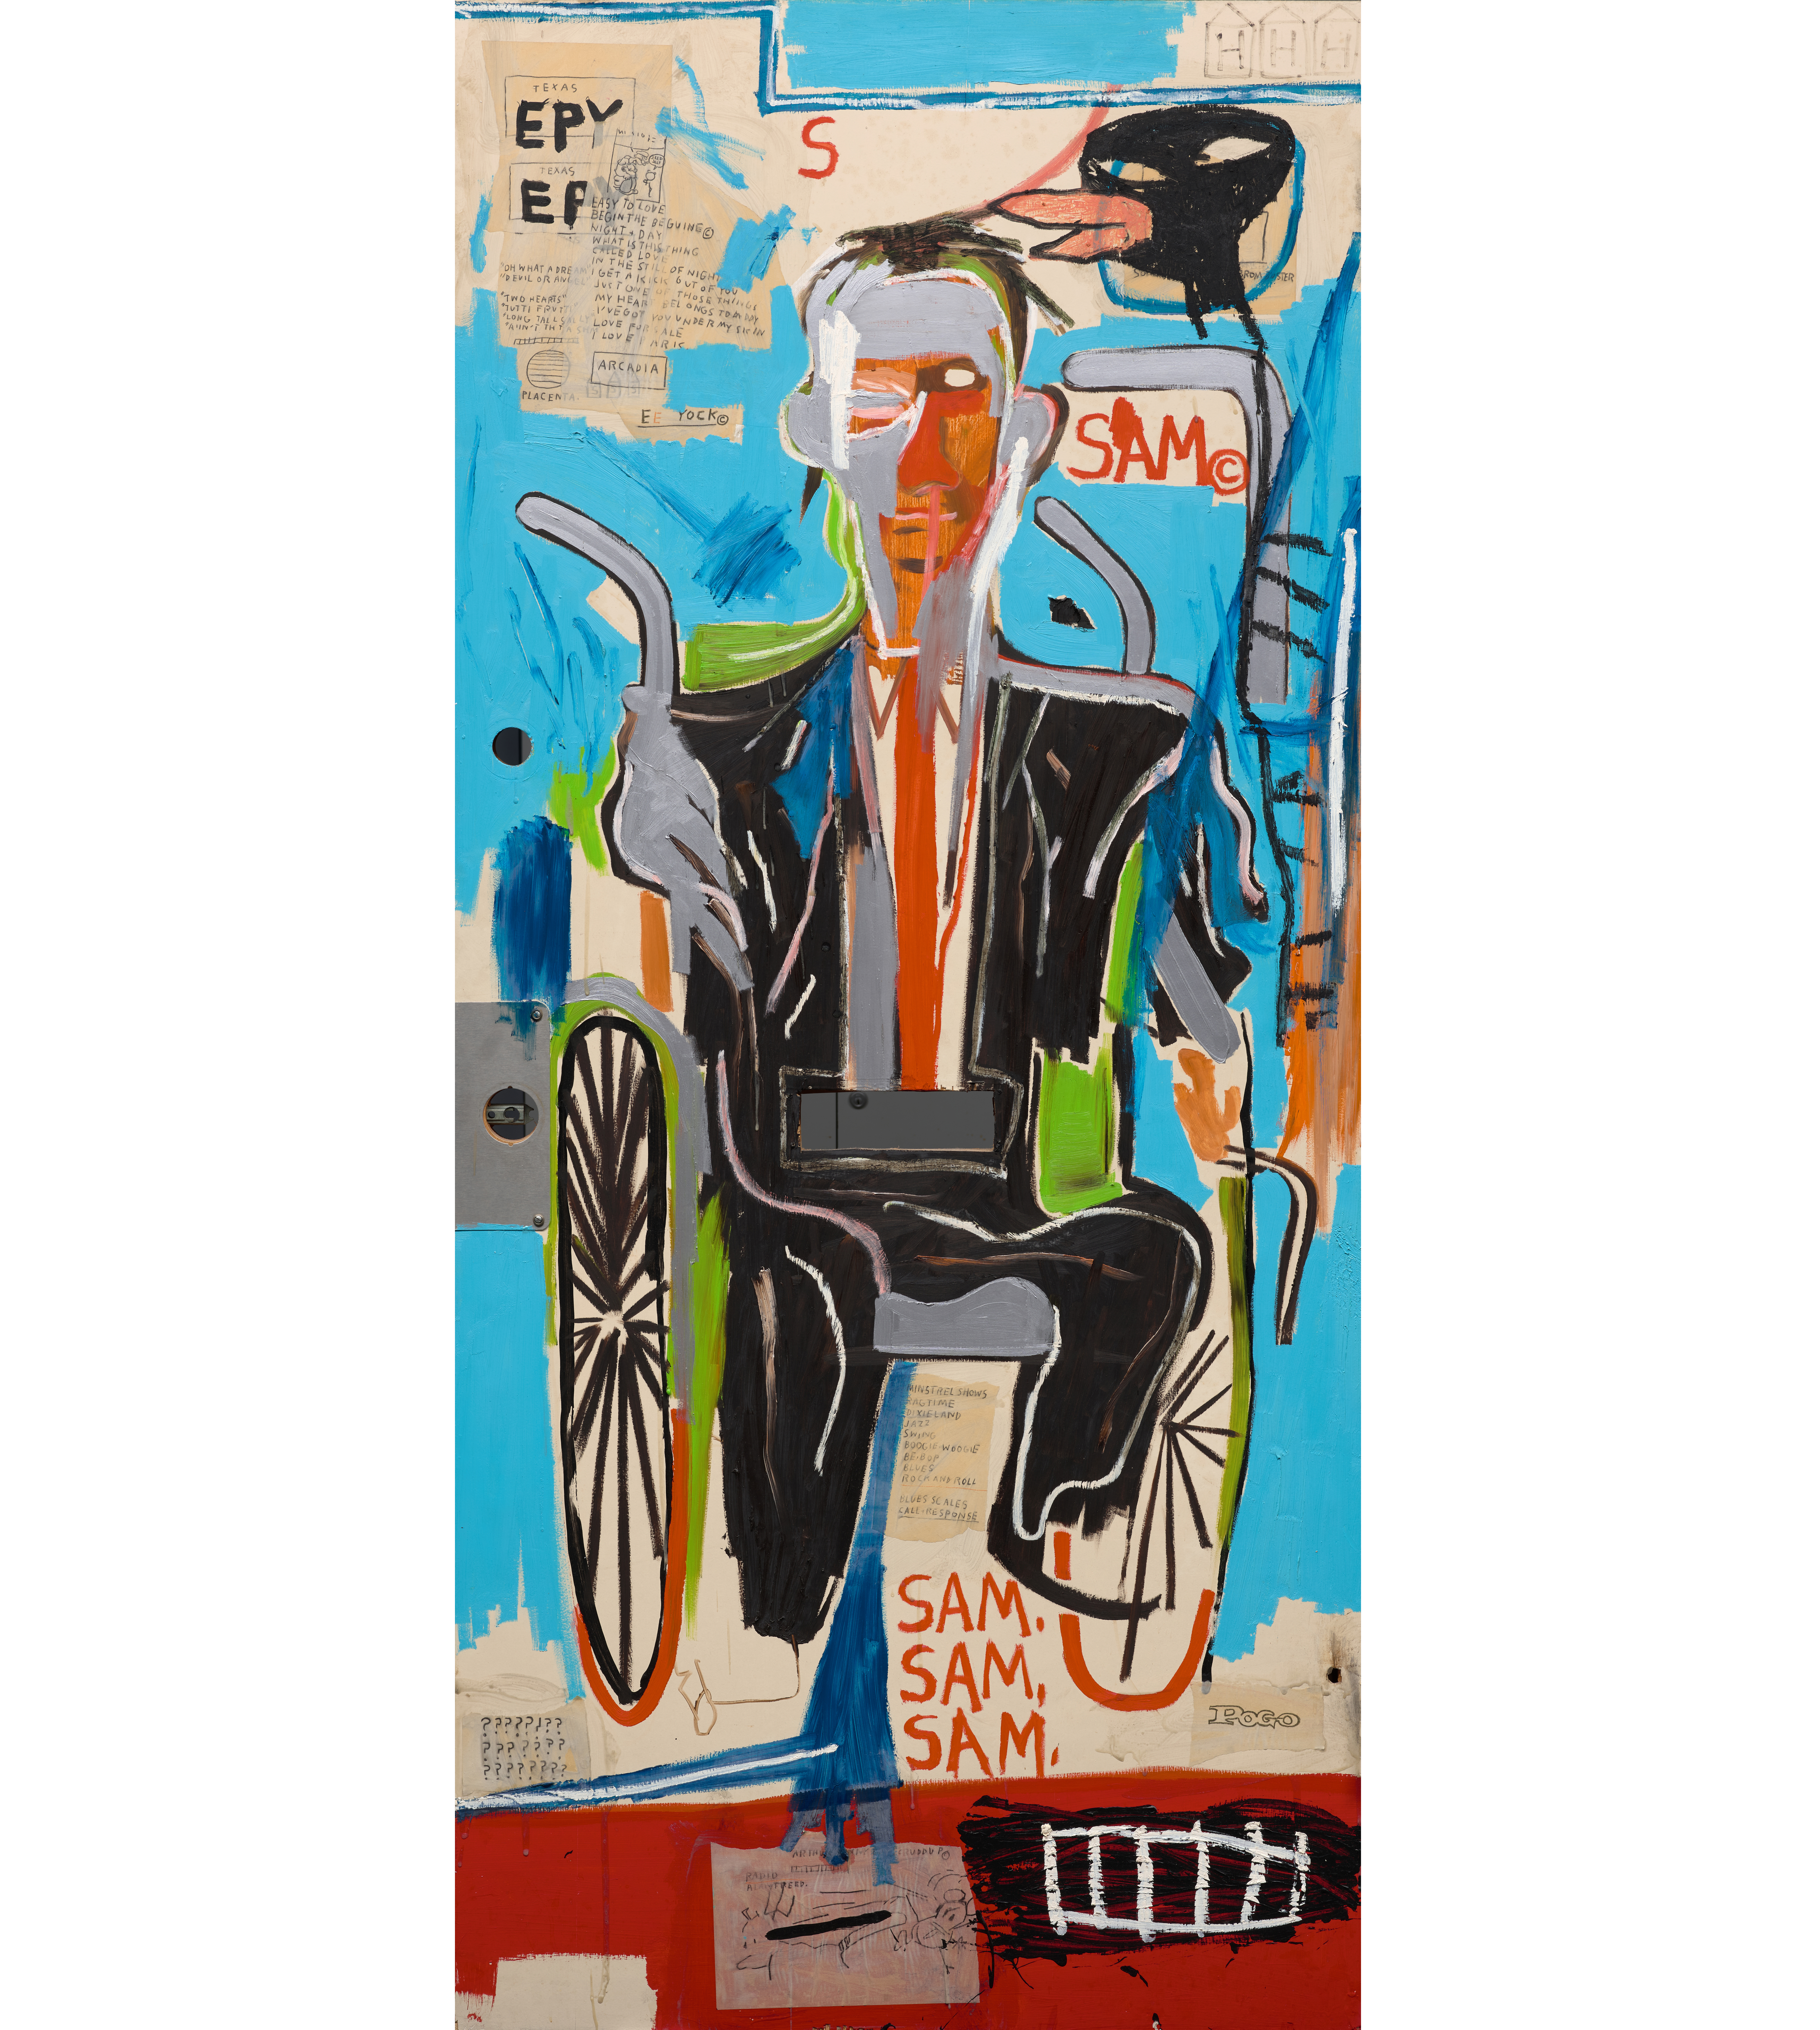 Jean-Michel Basquiat, ‘Sam F,’ 1985, oil on door, Dallas Museum of Art, gift of Samuel N. and Helga A. Feldman, 2019.31, © Estate of Jean-Michel Basquiat. Licensed by Artestar, New York